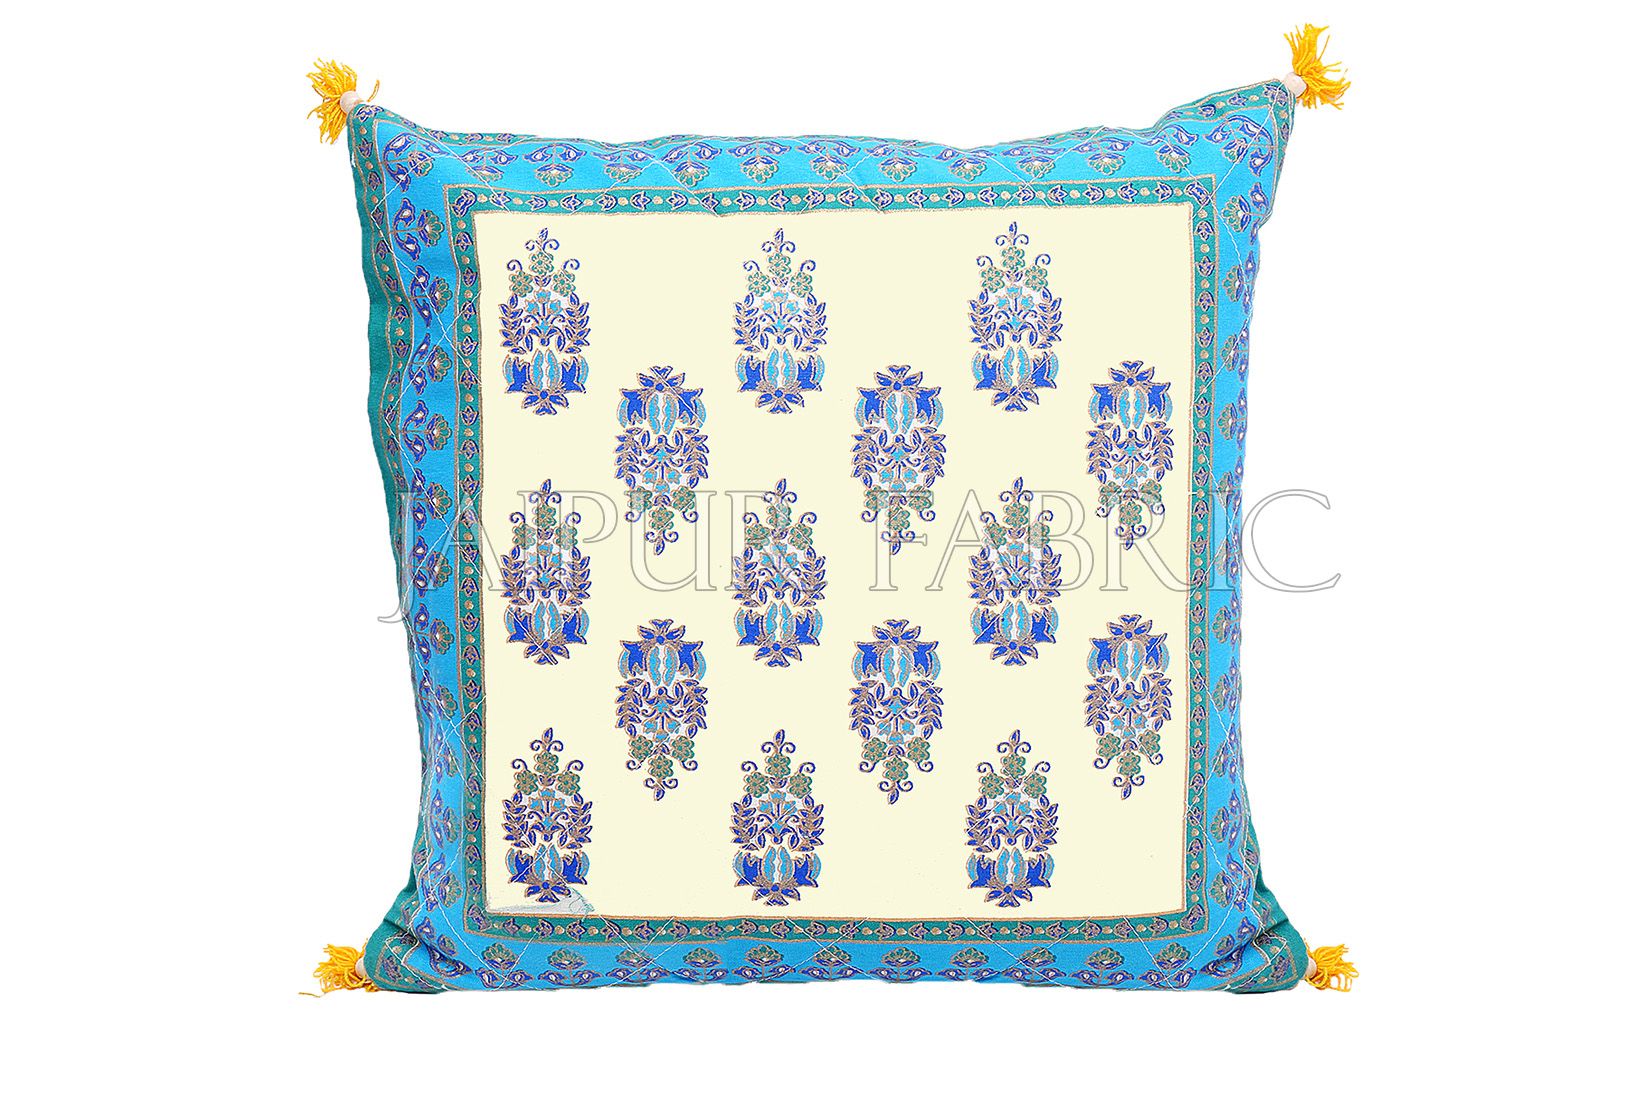 Cream Base with Cyan Border Rajasthani Kalash Design Cotton Cushion Cover